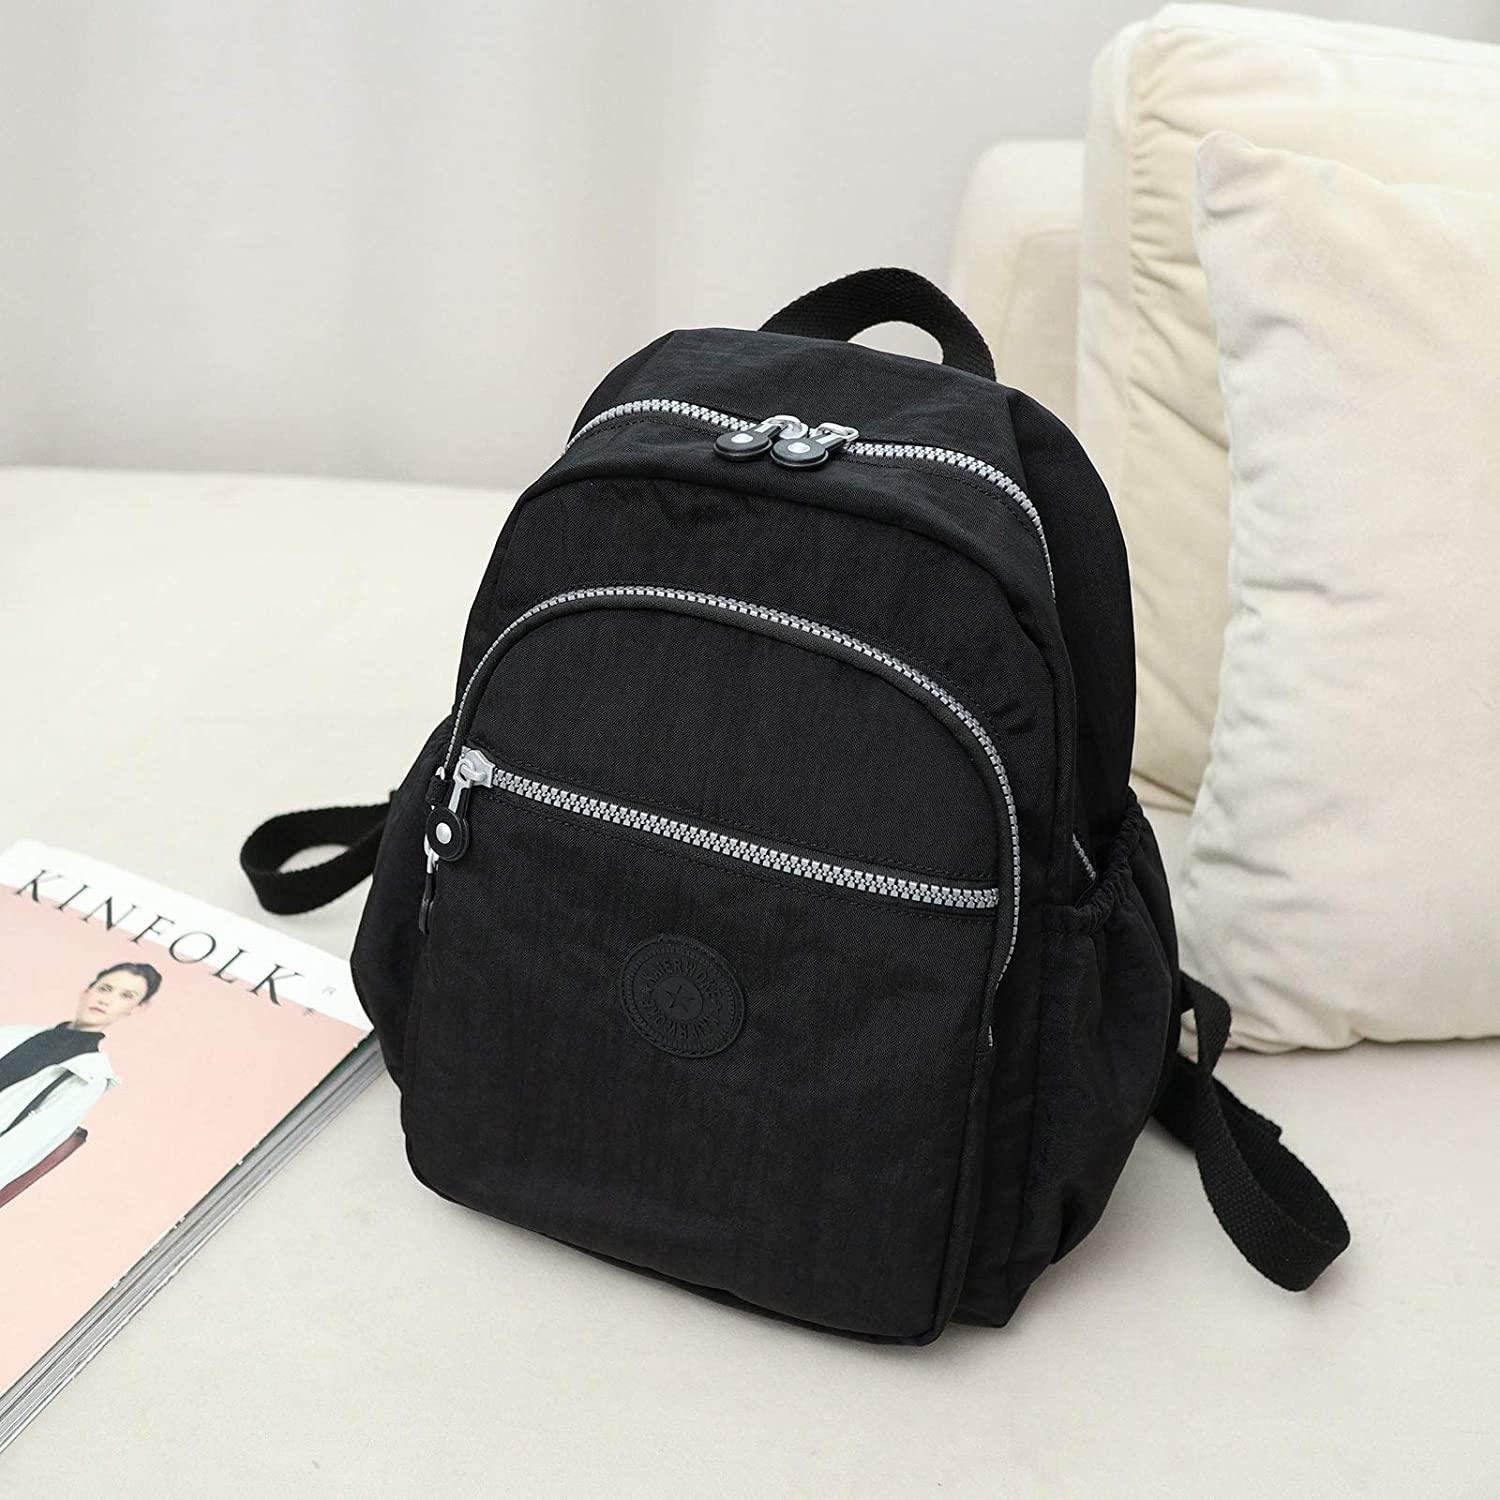  zhongningyifeng Backpack for Women Small, Mini Nylon